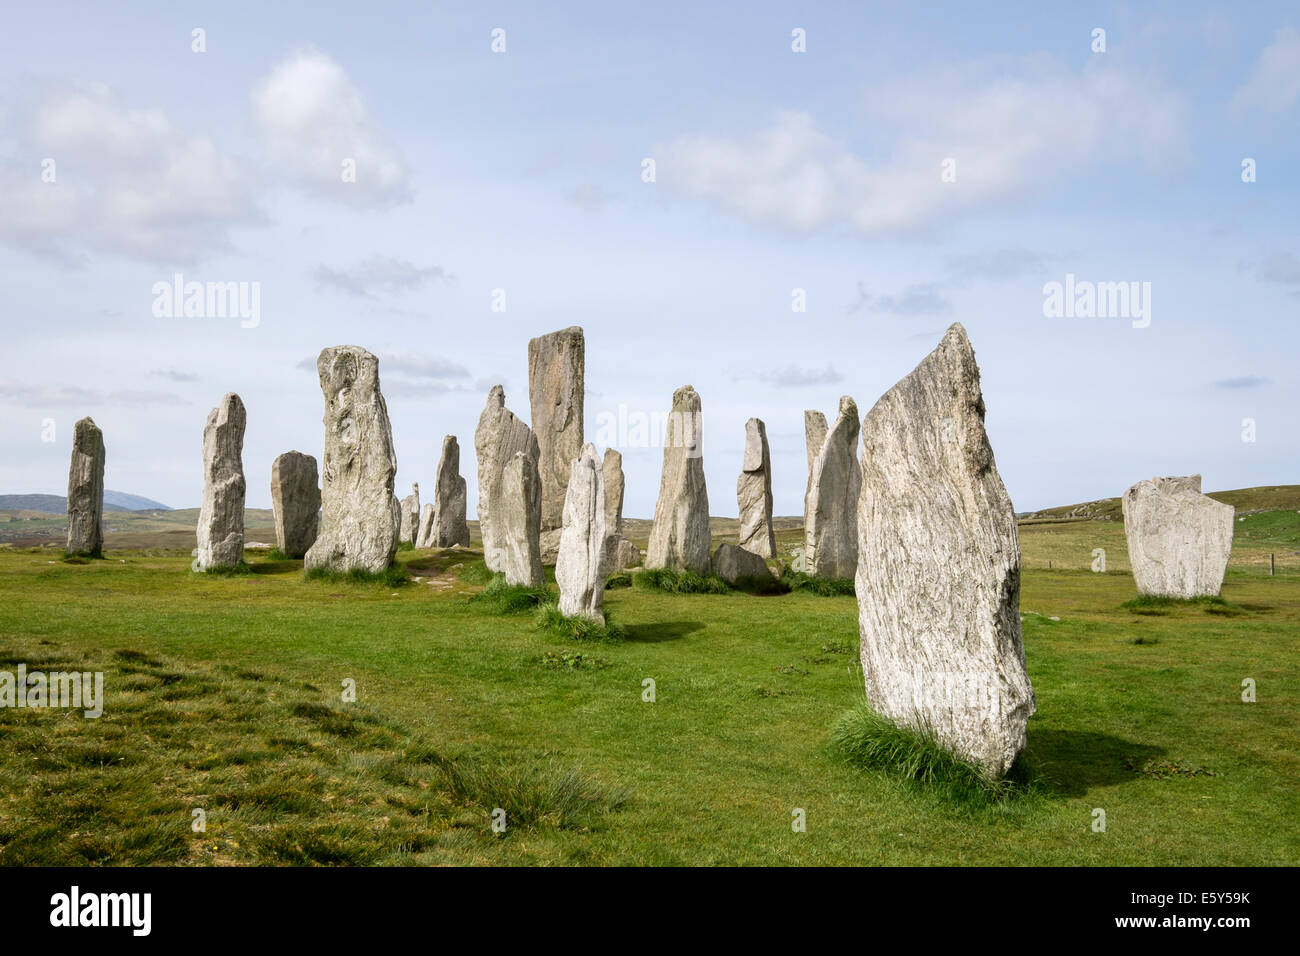 Neolítico en Standing Stones Callanish Stone Circle desde 4500 BC. Isla de Lewis Calanais Outer Hebrides Islas occidentales de Escocia Foto de stock